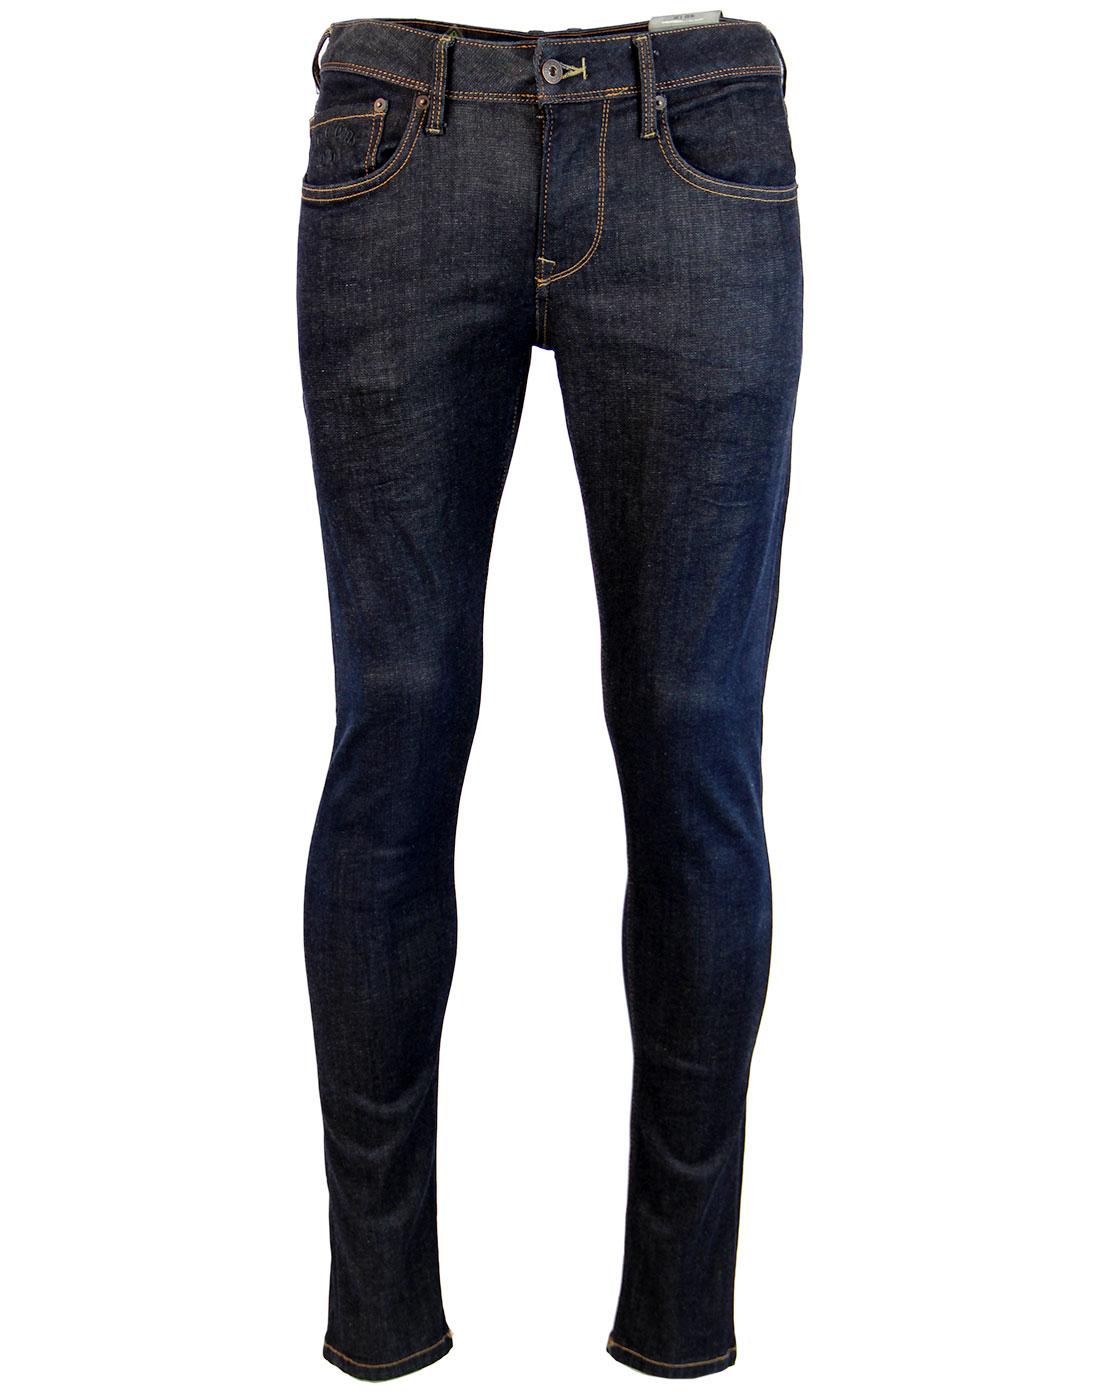 PEPE JEANS Finsbury Retro Indie Mod Dark Denim Drainpipe Jeans